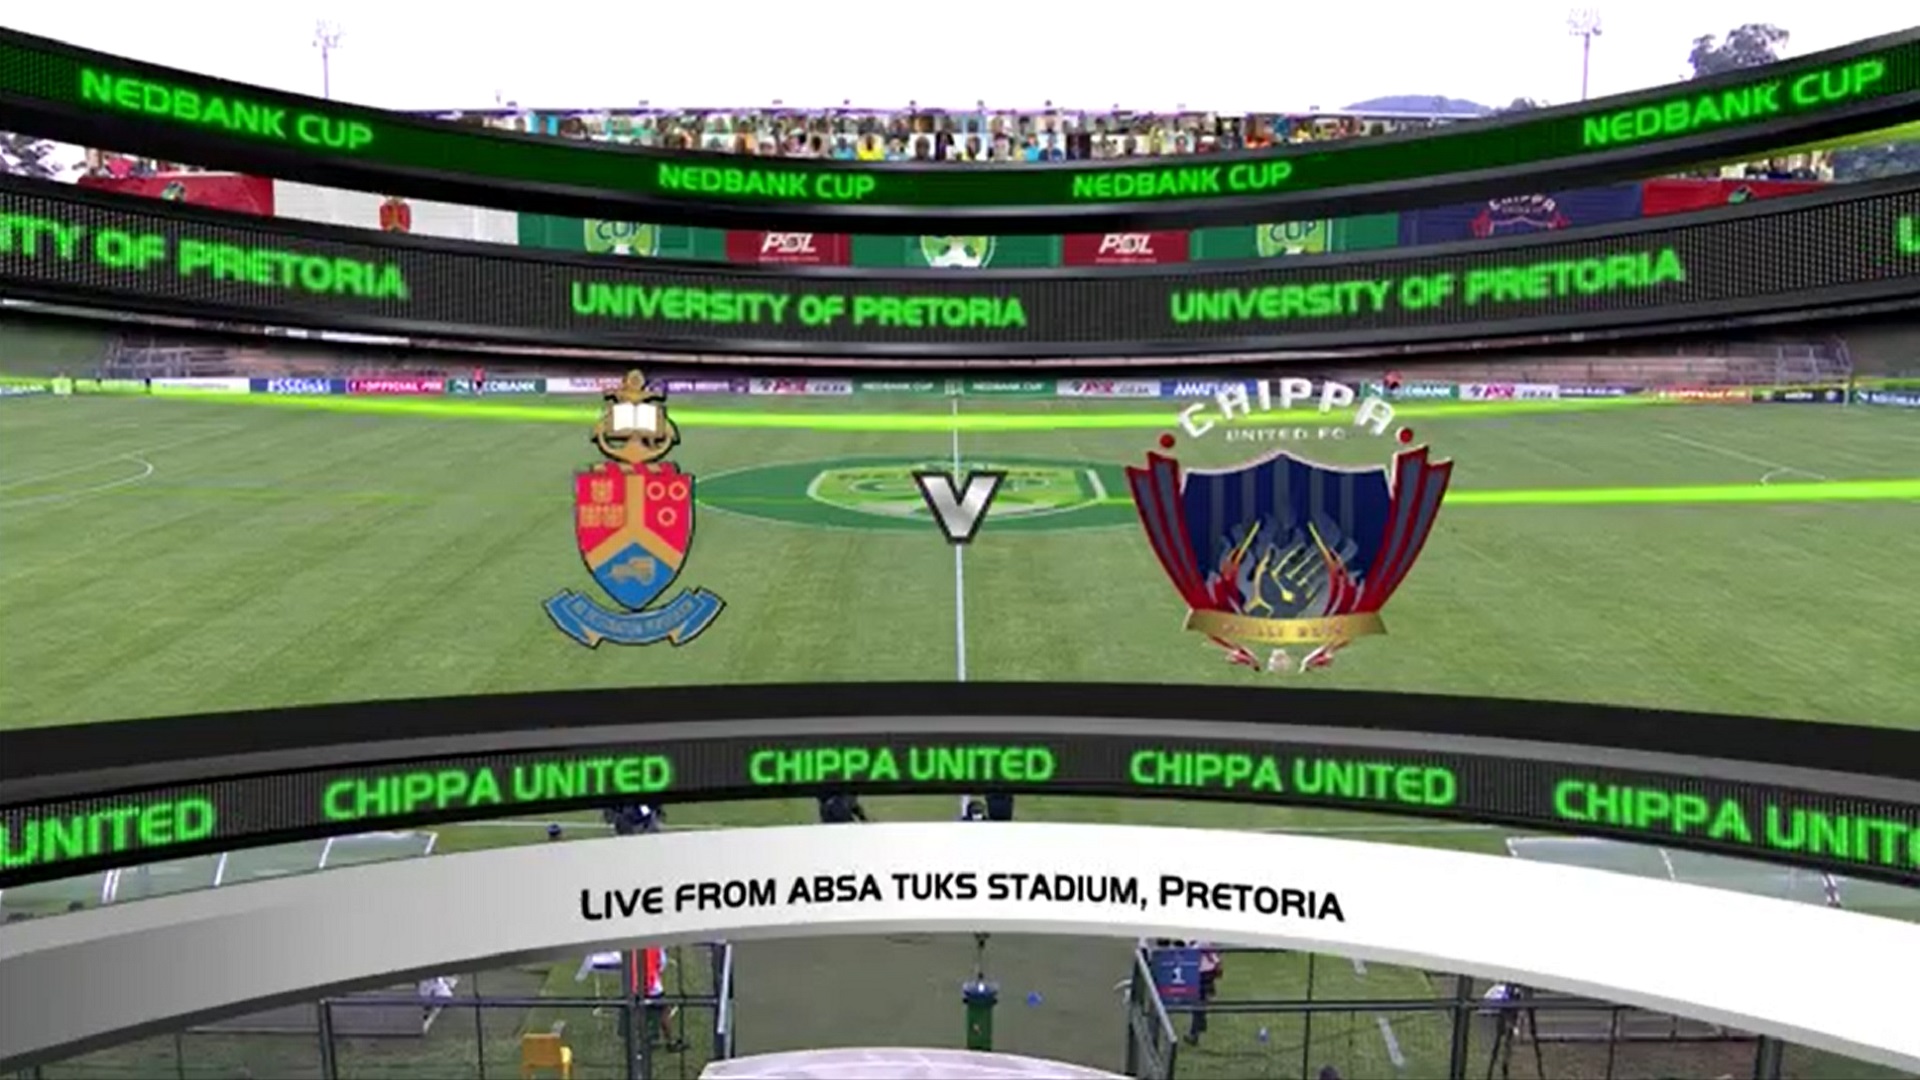 Nedbank Cup | University of Pretoria v Chippa United | Highlights